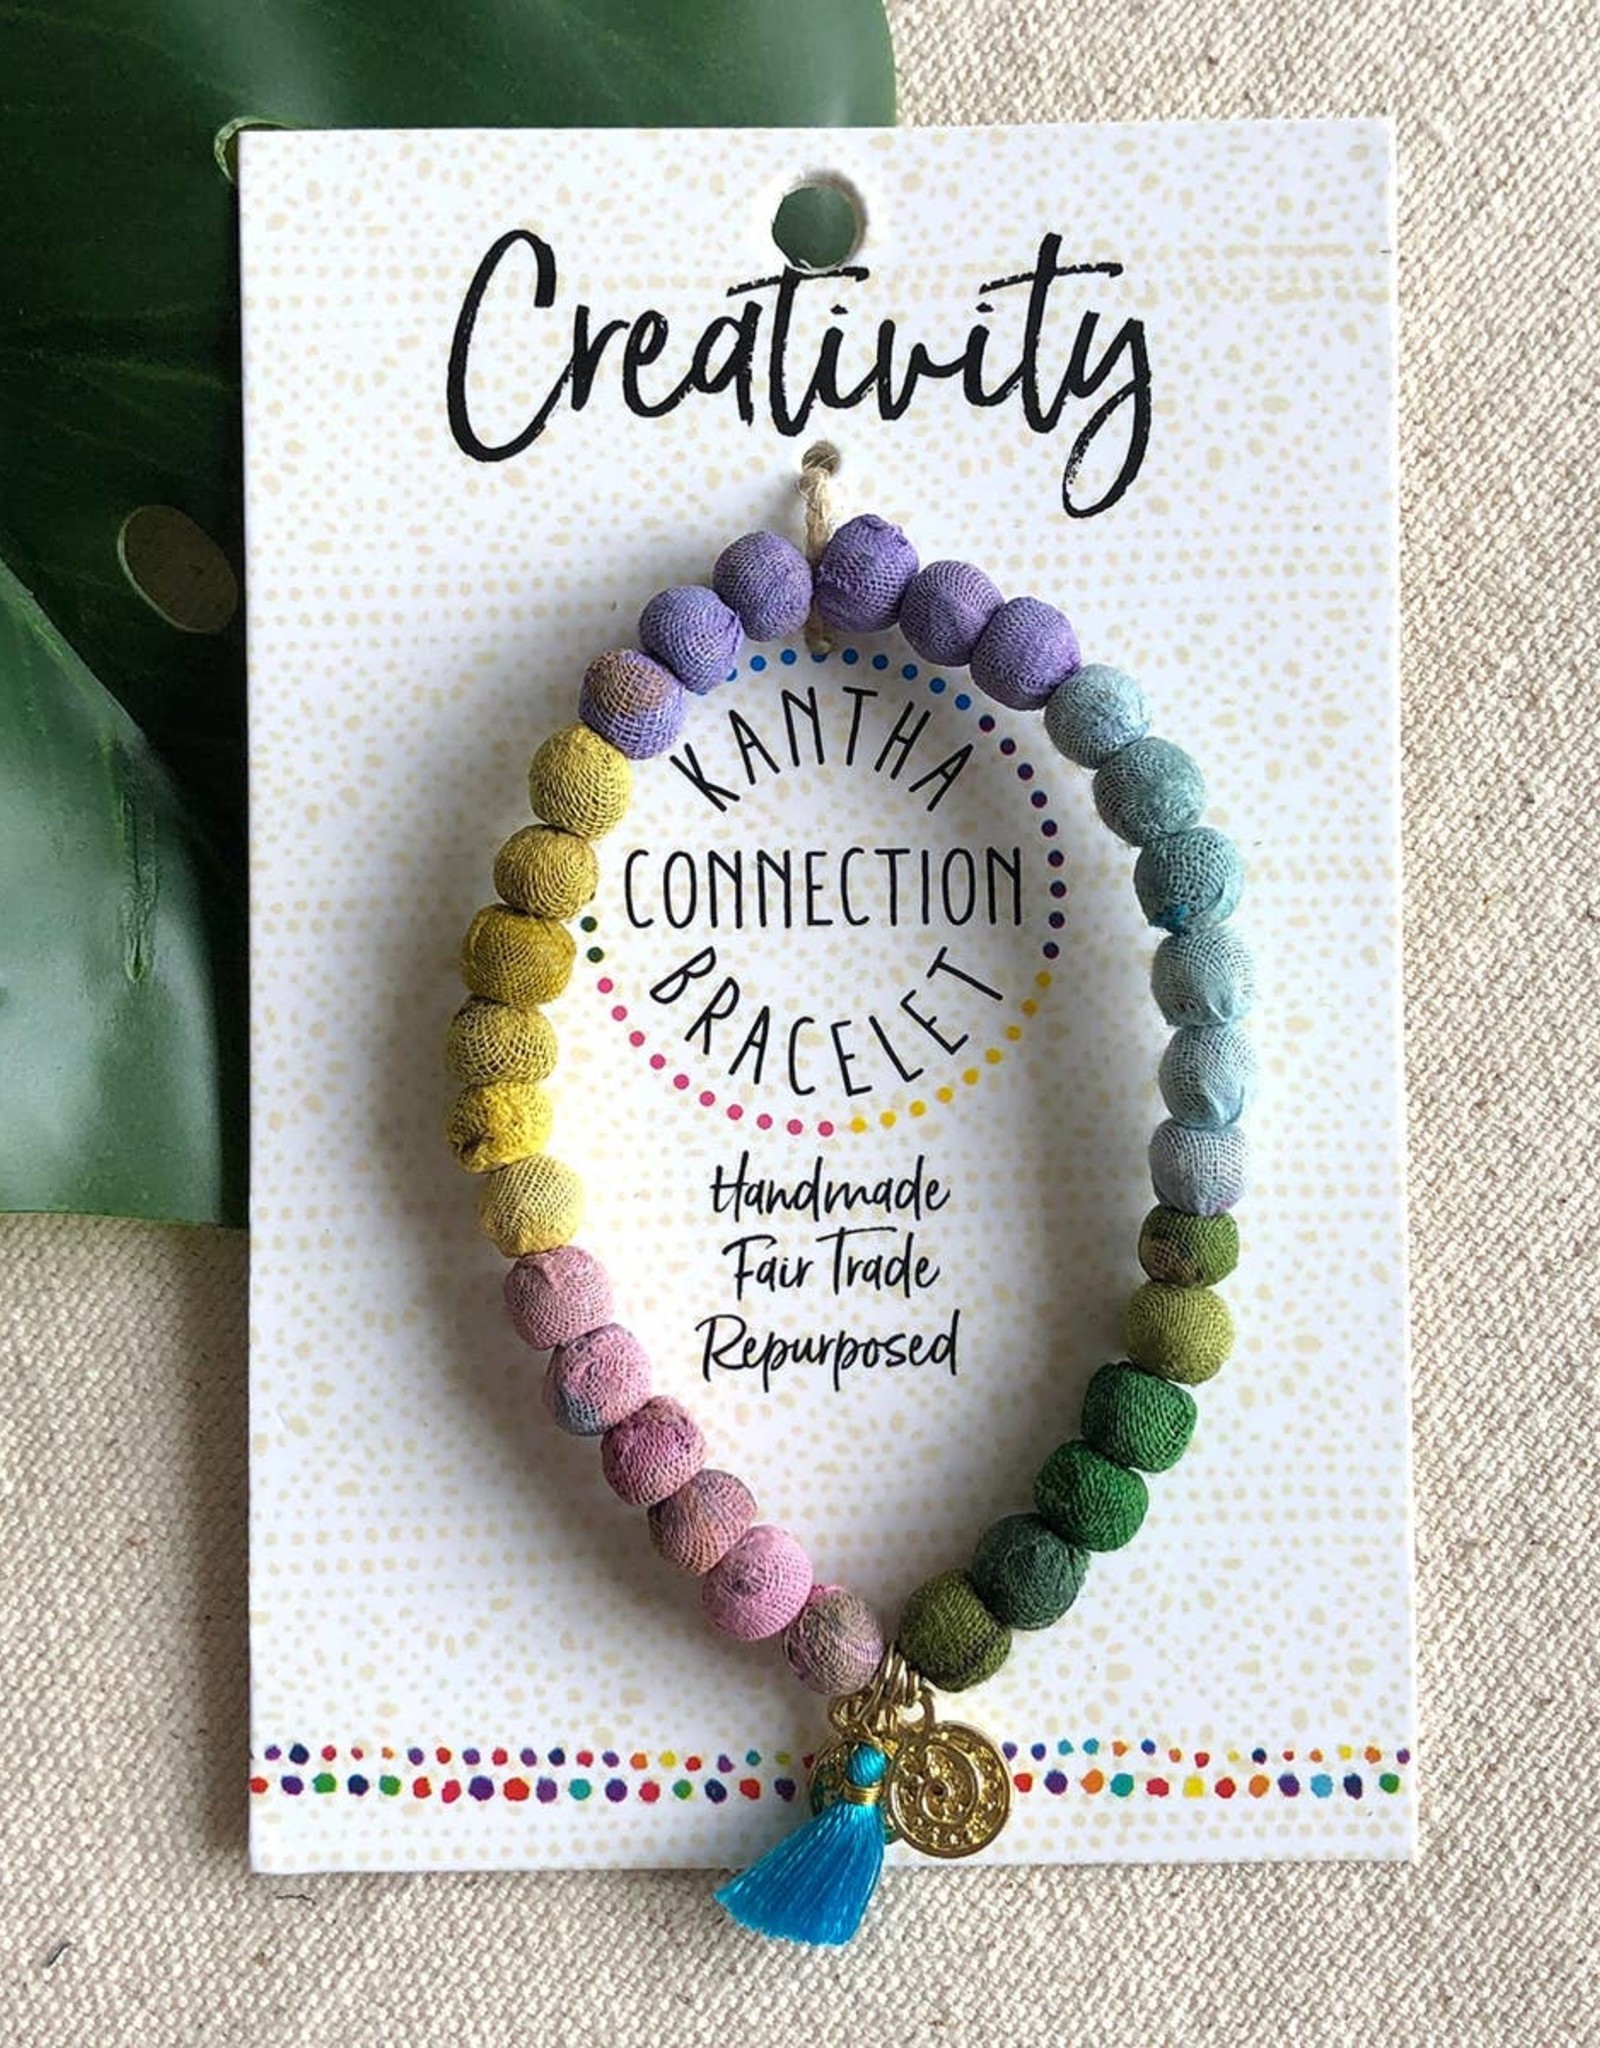 WorldFinds Kantha Connection Bracelet - Creativity